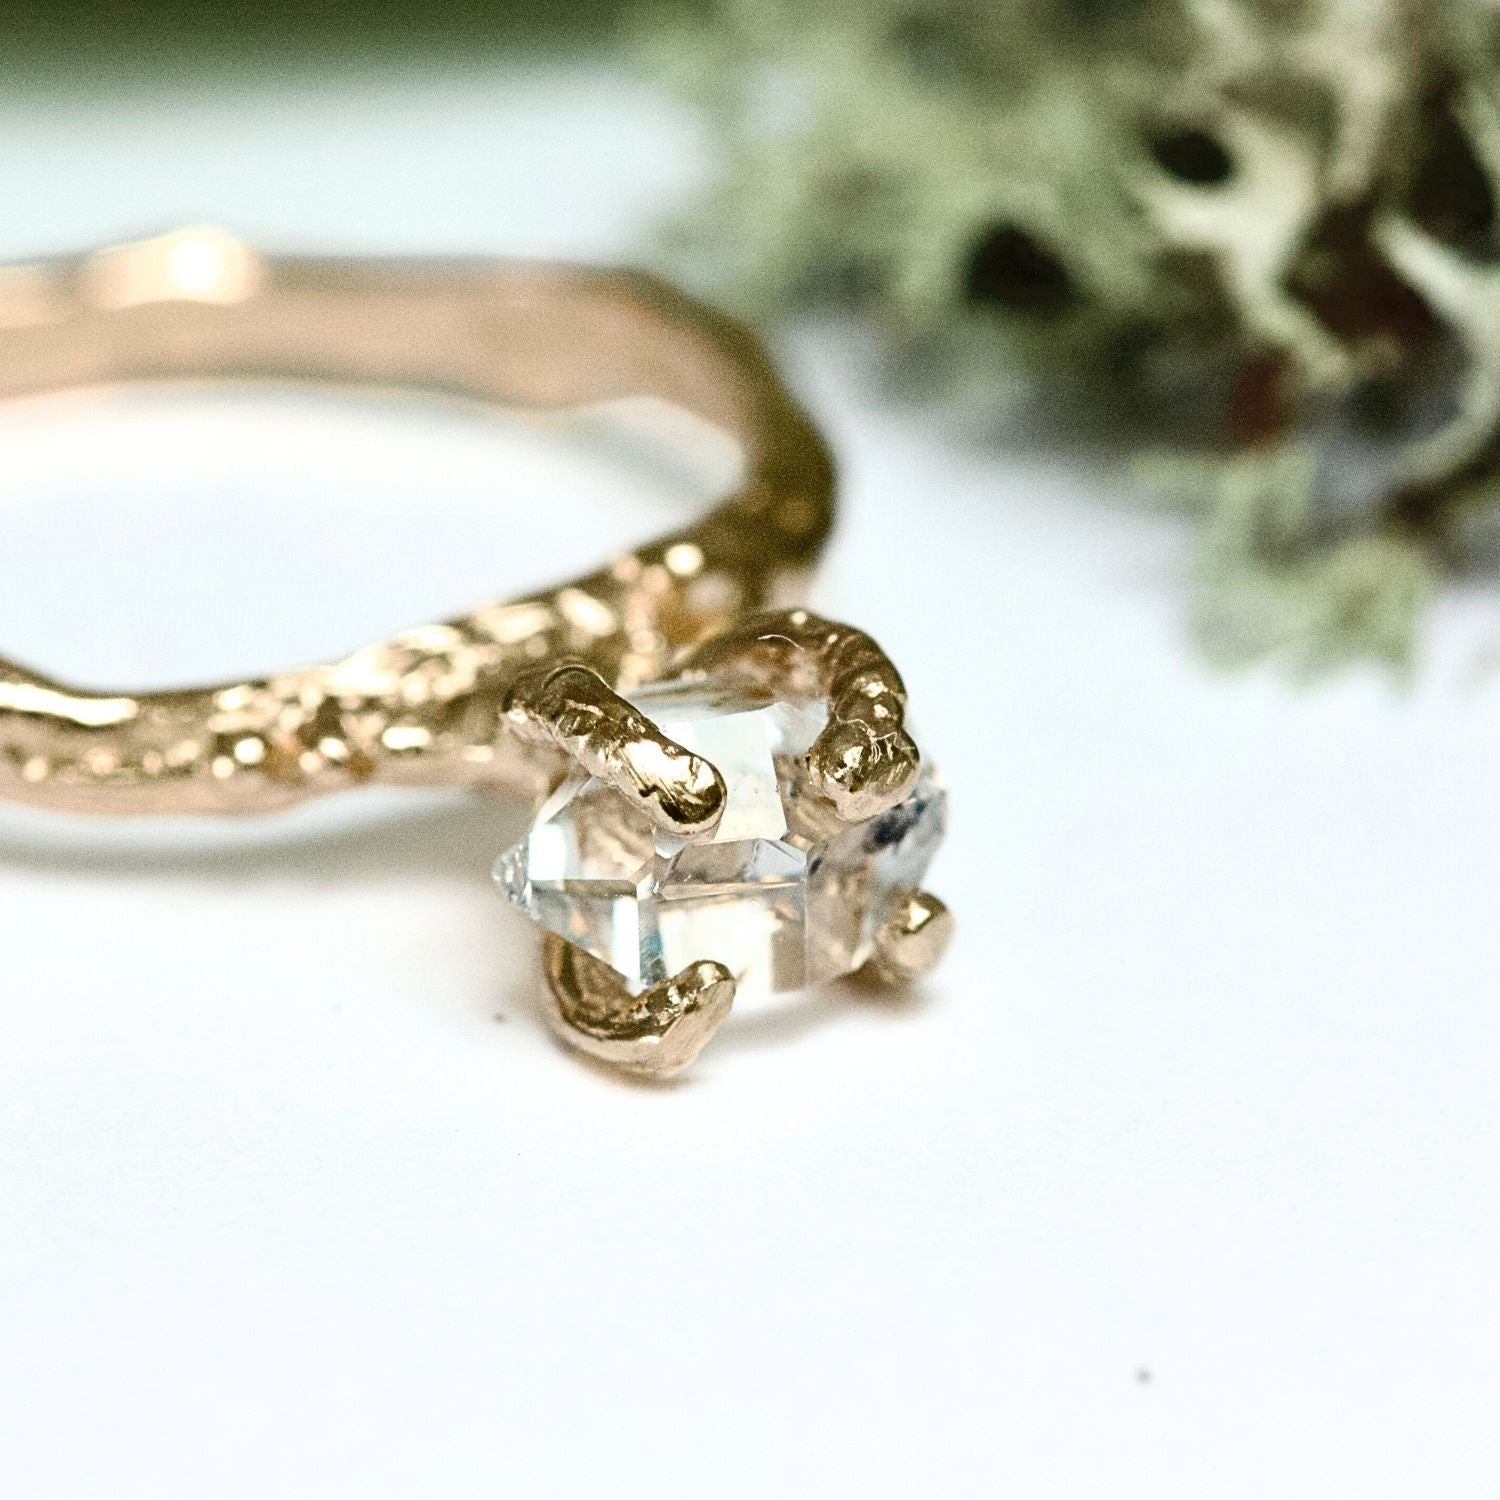 Herkimer Quartz 9ct Solid Gold Engagement Ring